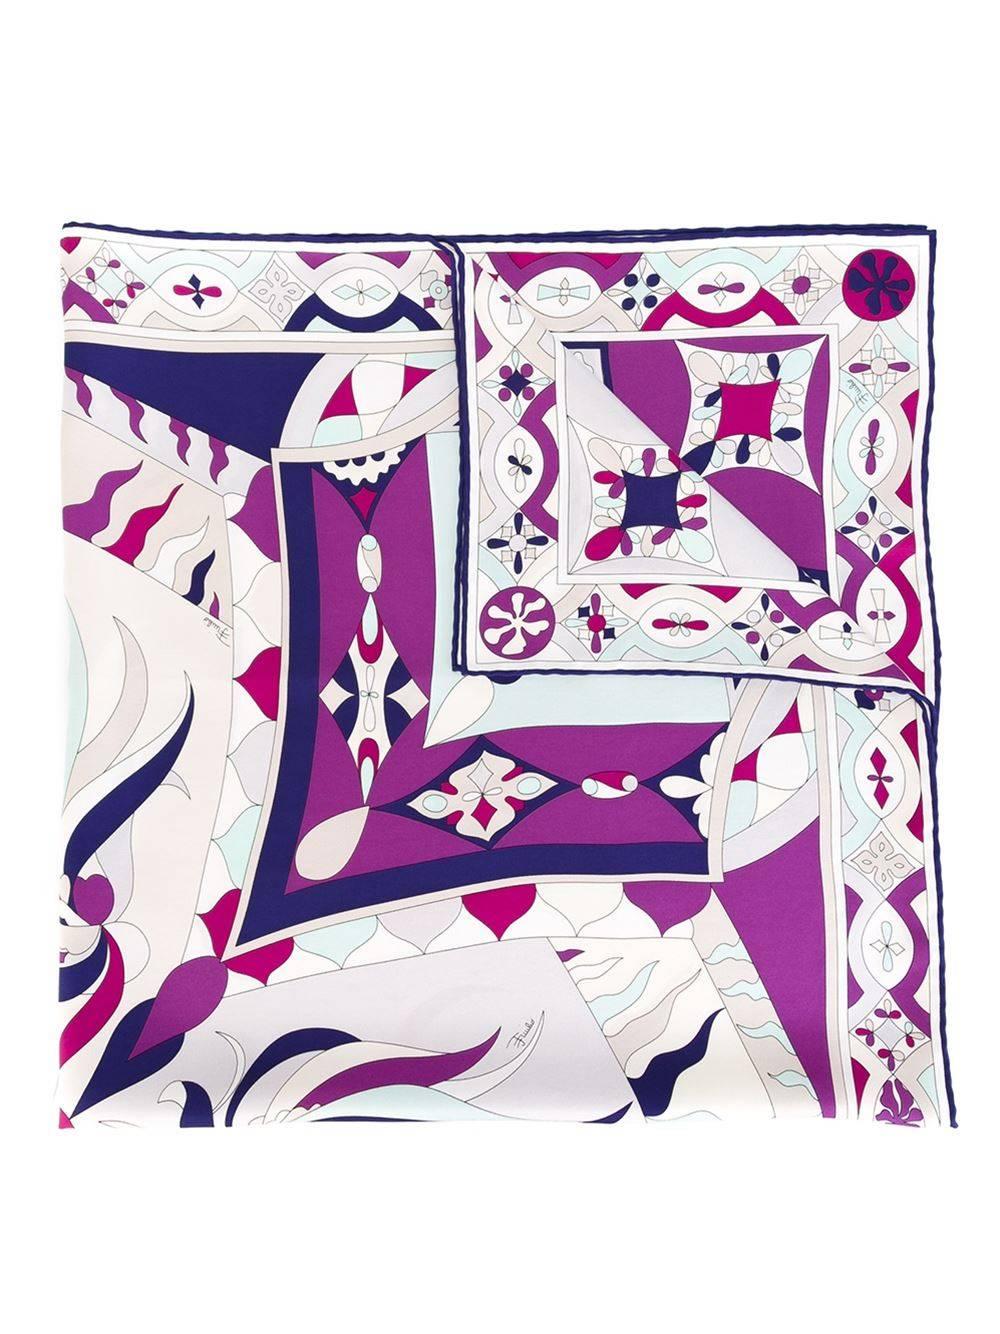 Multicoloured silk printed scarf.

Colour: Multi

Material: Silk 100%

Measurements: W: 86cm, L: 90cm

Condition: 10 out of 10 
Excellent